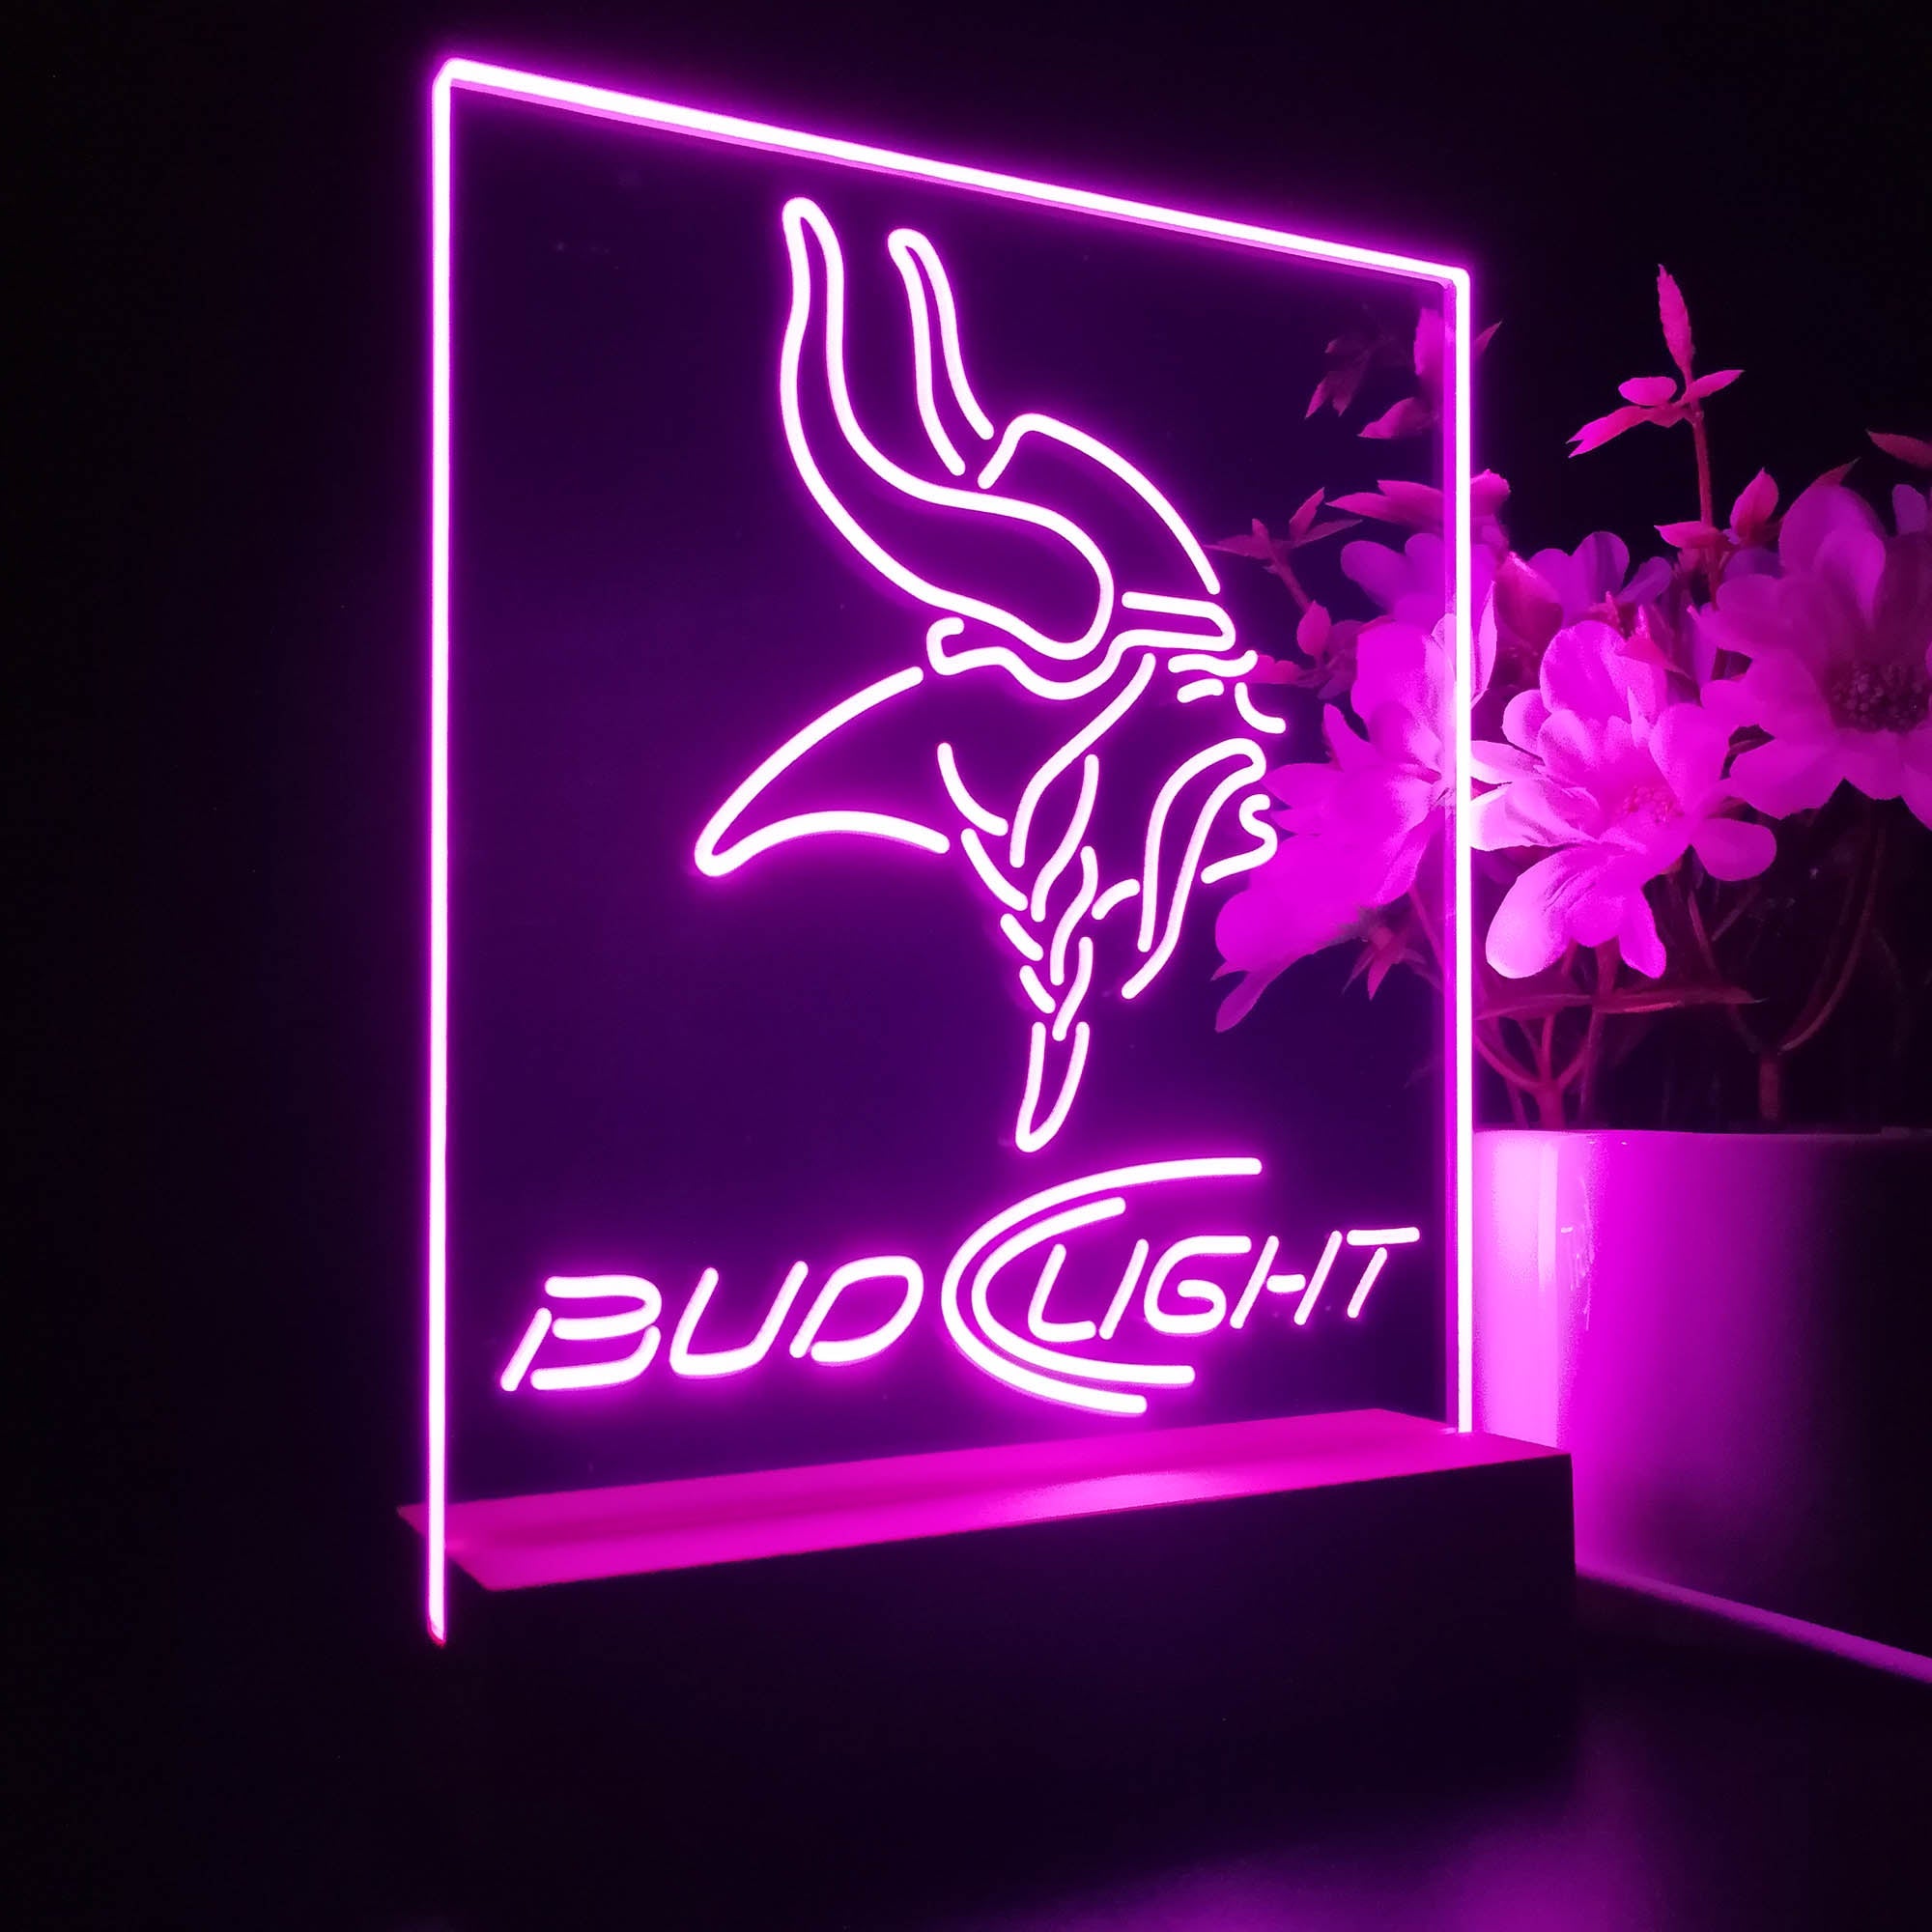 Minnesota Vikings Night Light Neon Pub Bar Lamp